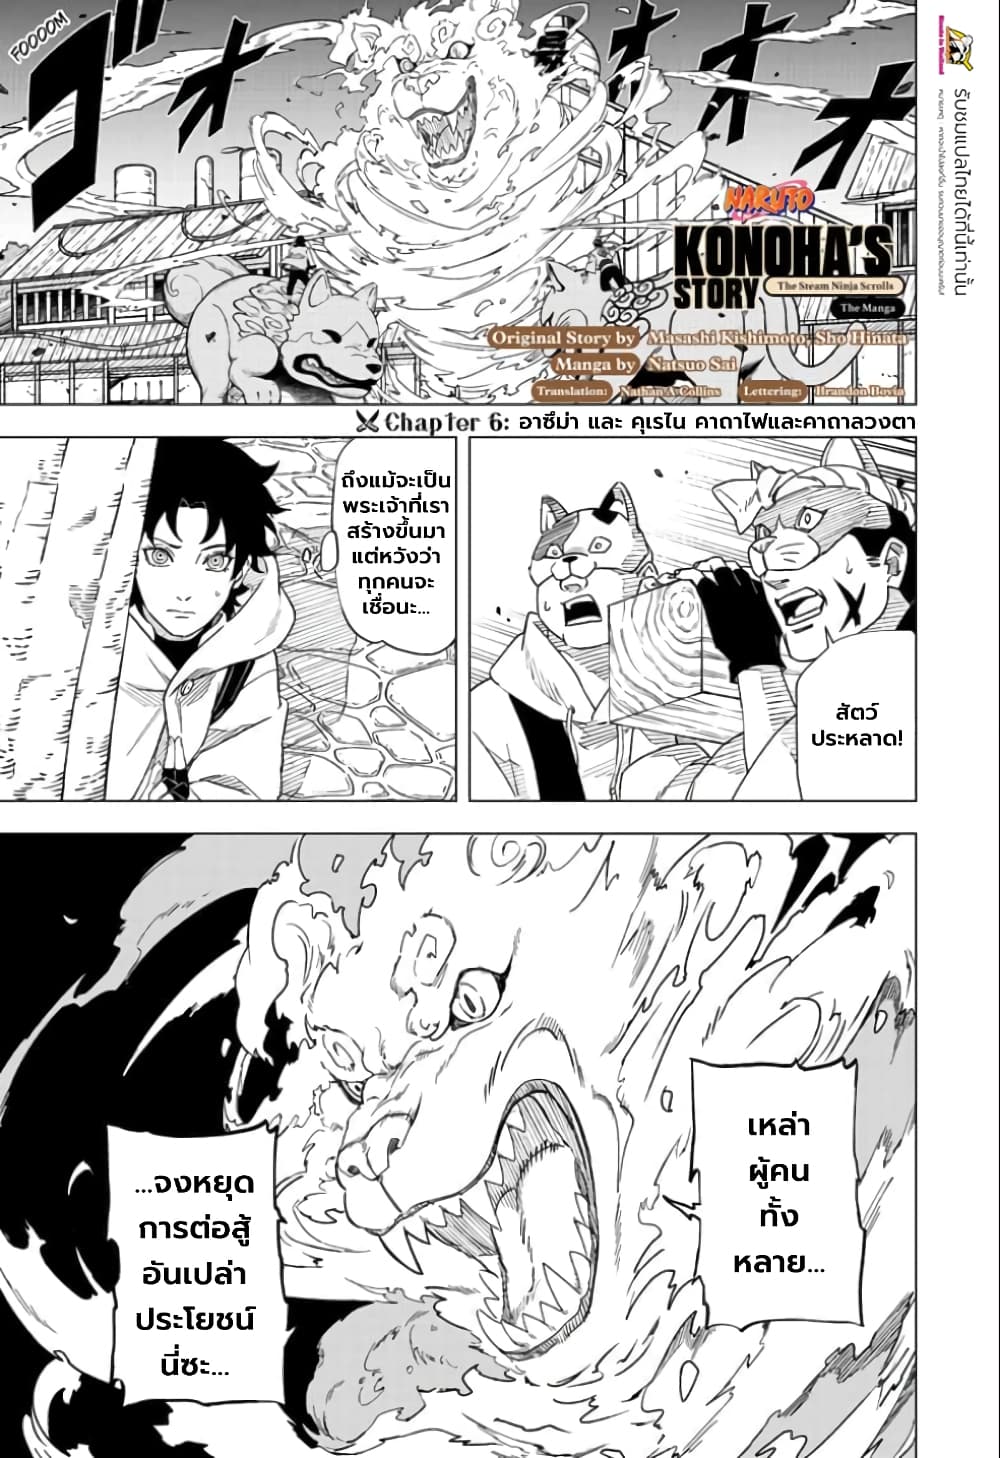 Naruto Konoha’s Story – The Steam Ninja Scrolls The Manga ตอนที่ 6 (1)